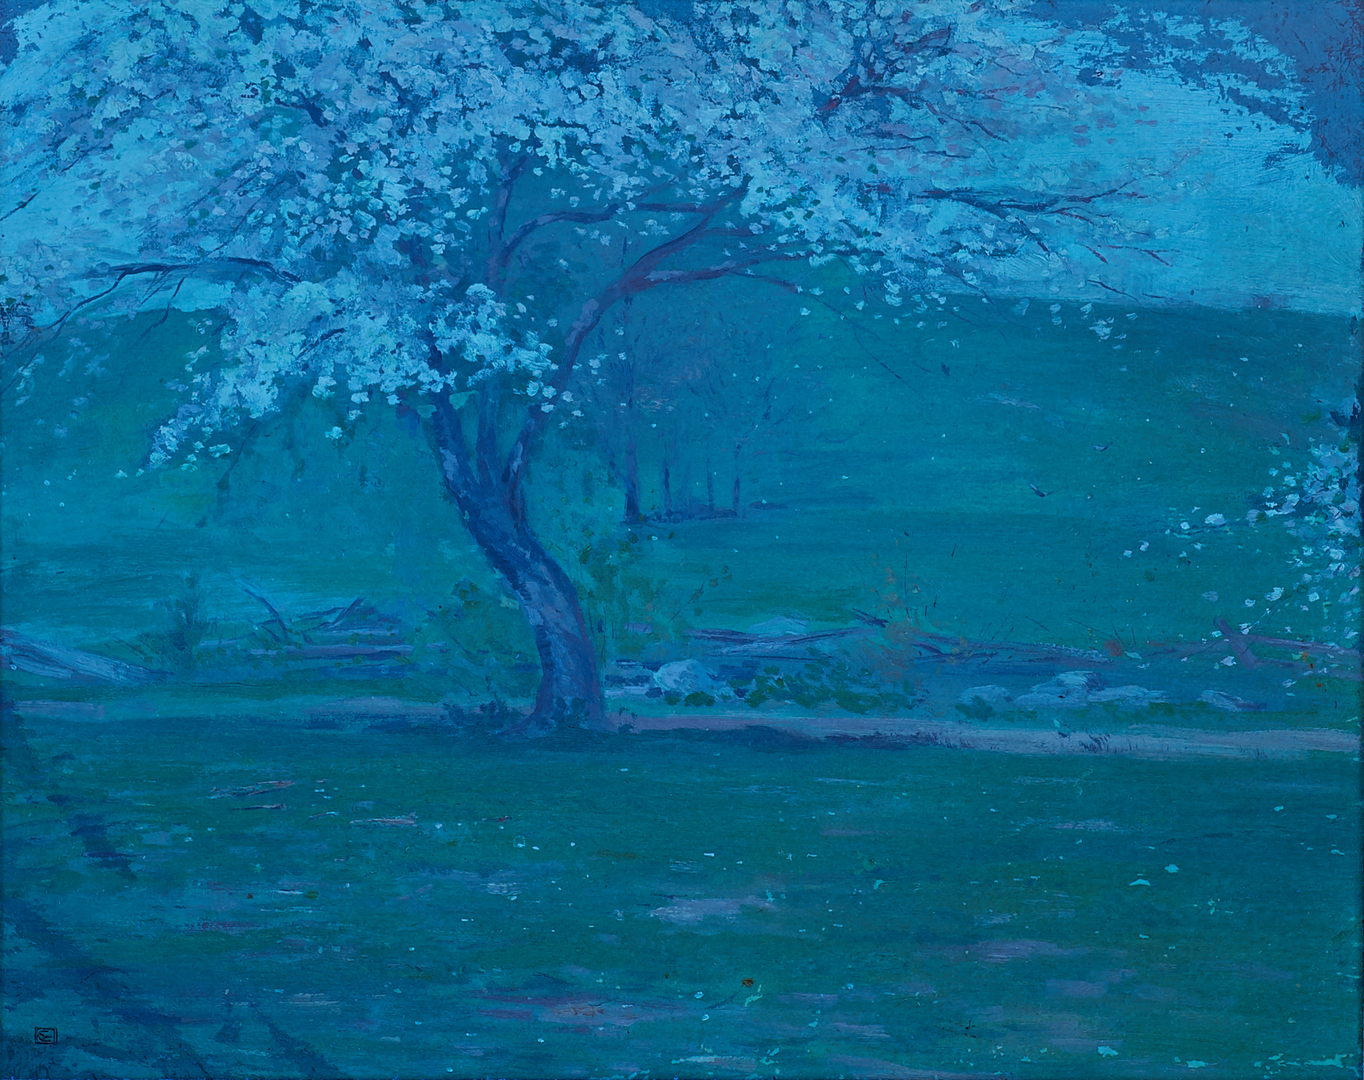 Lot 673: Attr. Eliot Clark O/C, Impressionist Landscape